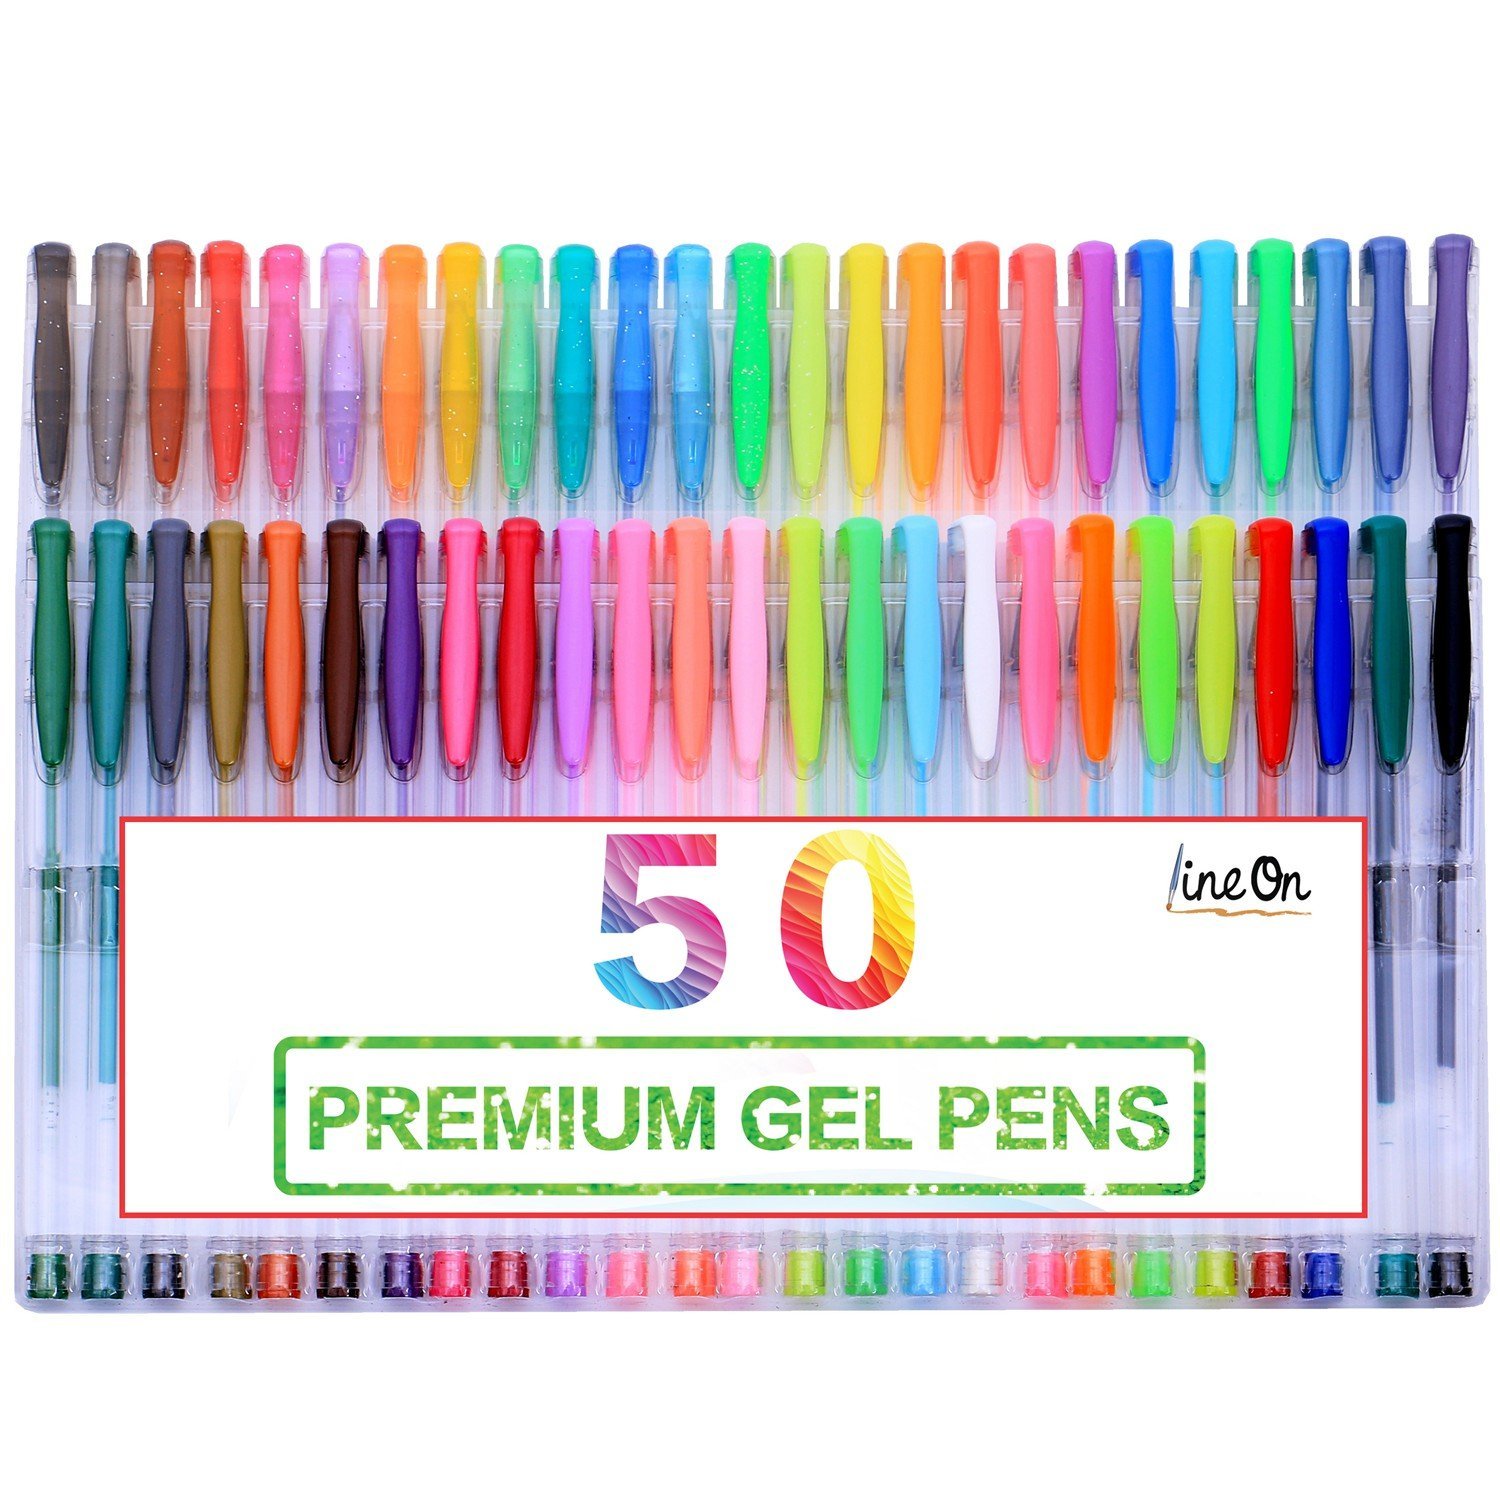 Lineon 50 Colors Gel Pens – Just $8.99!